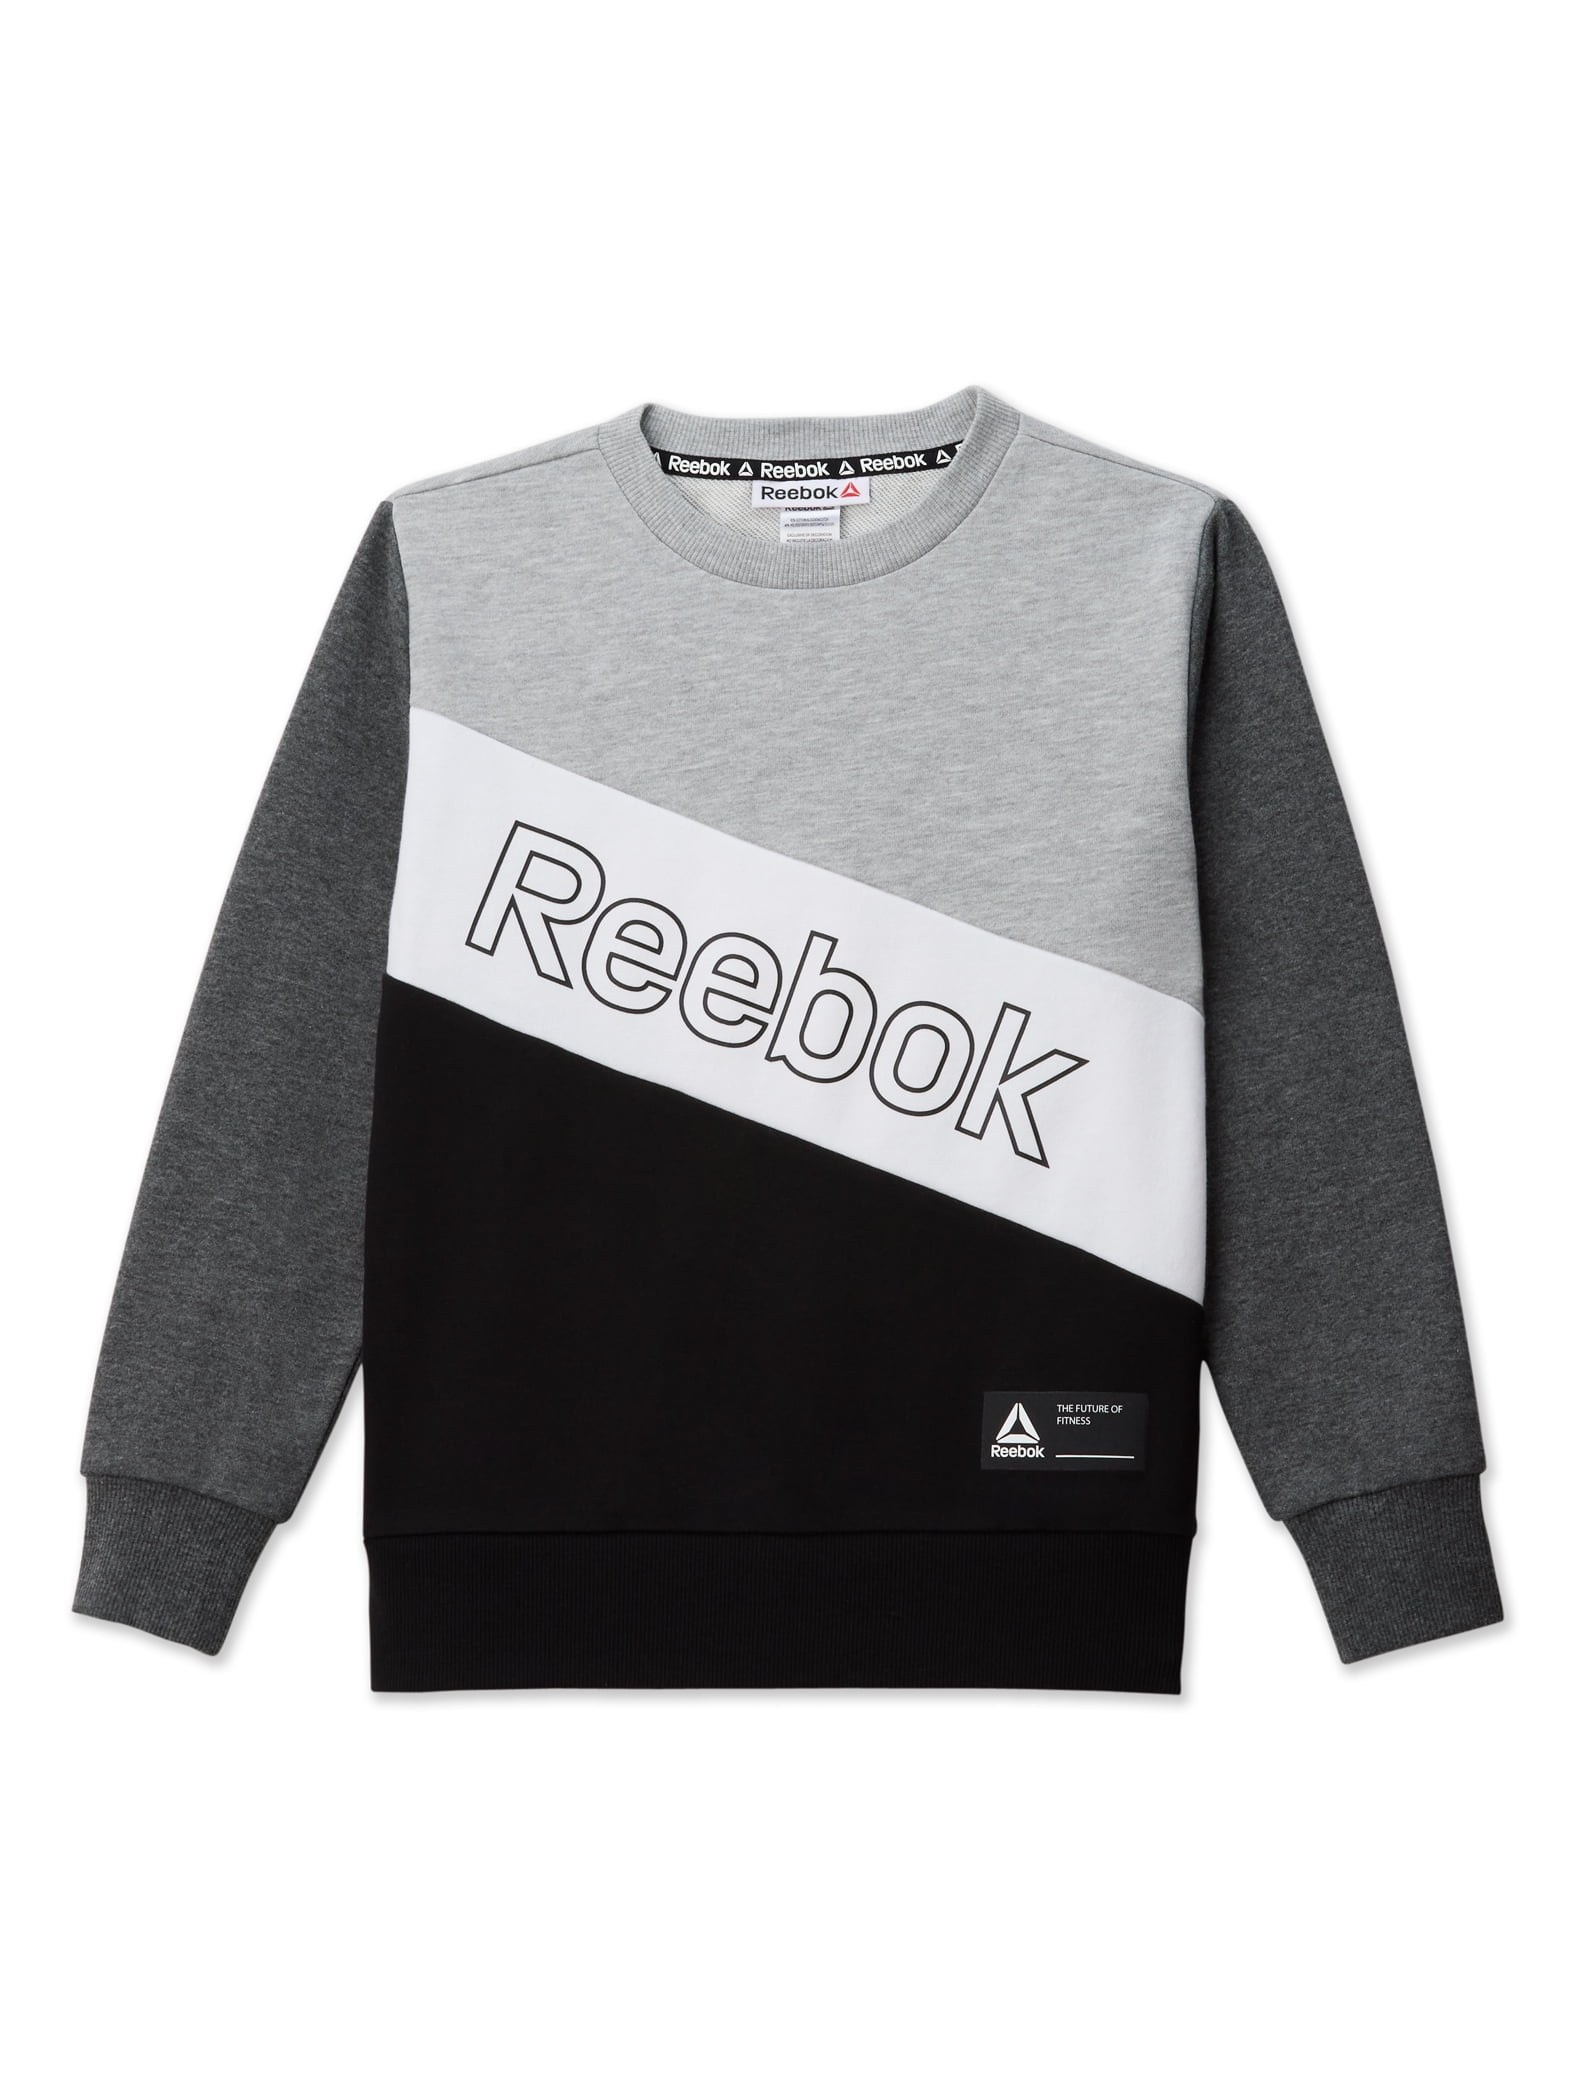 Reebok Boys Crew Sweatshirt